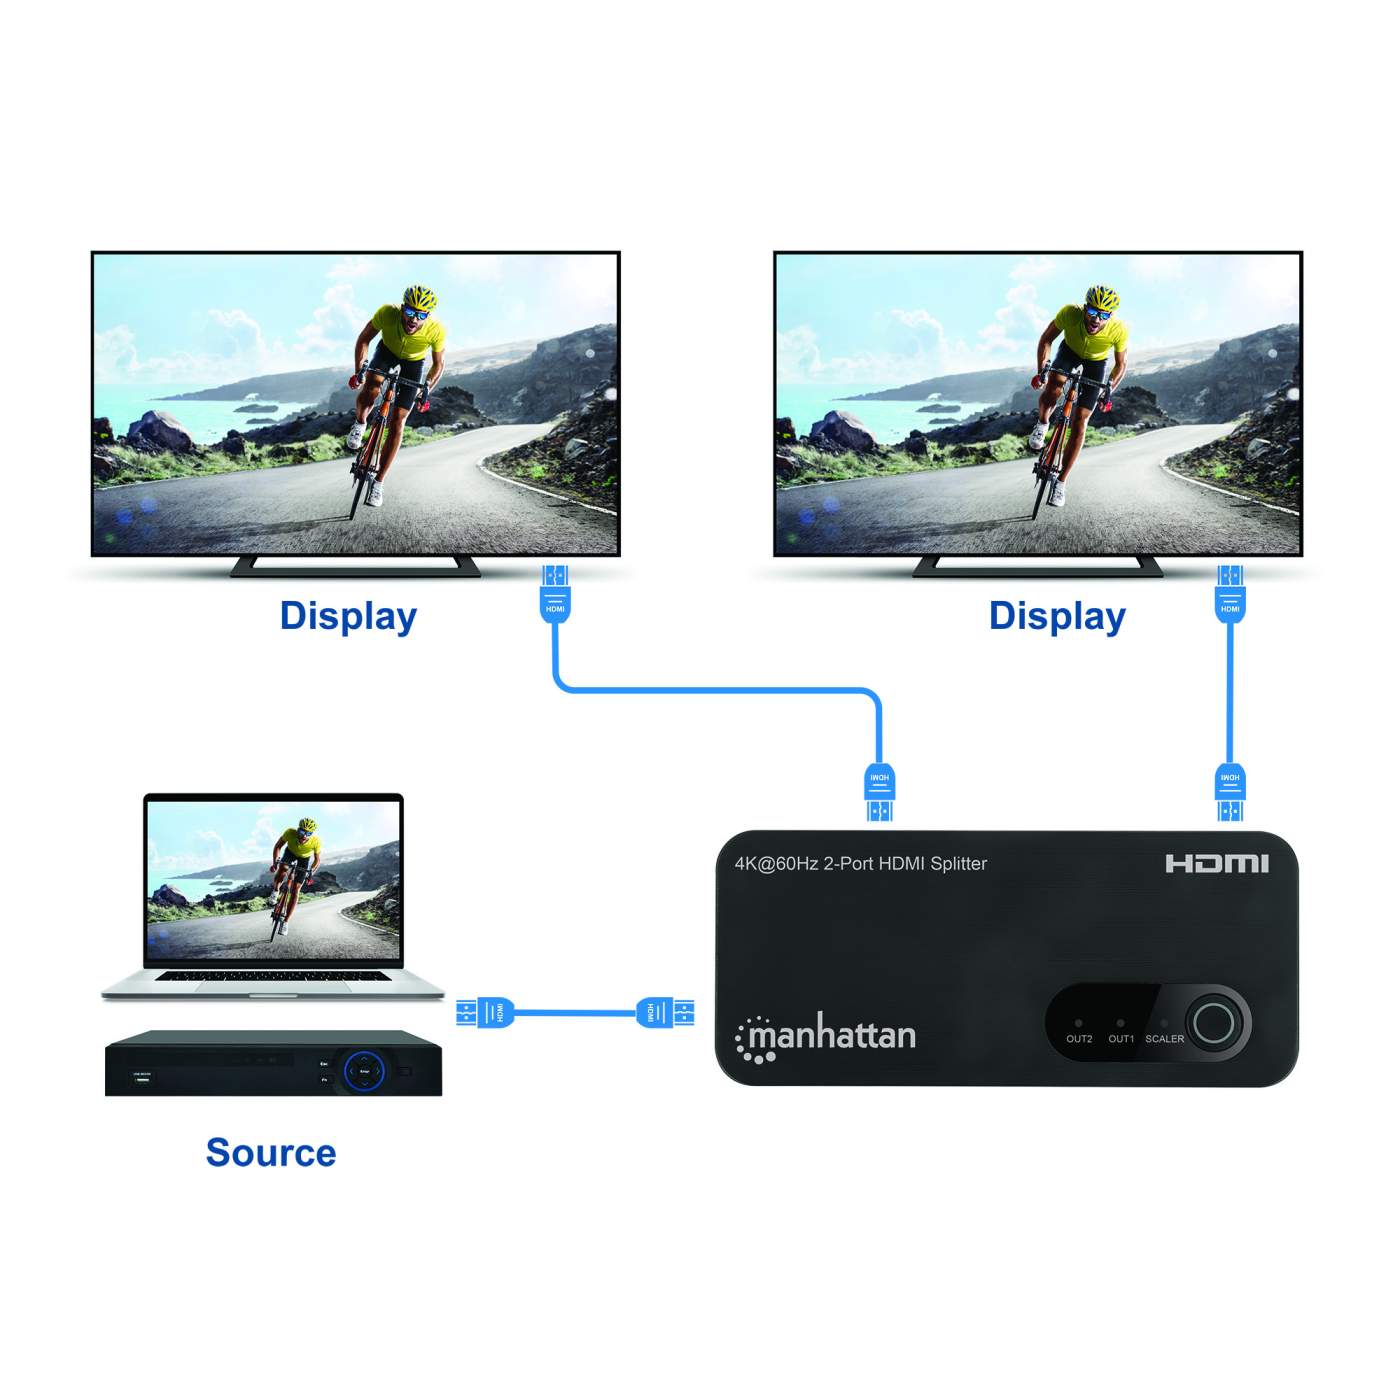 HDMI SPLITTER - Multiplexeur HDMI - 4 Sorties - 2024 - TOGO